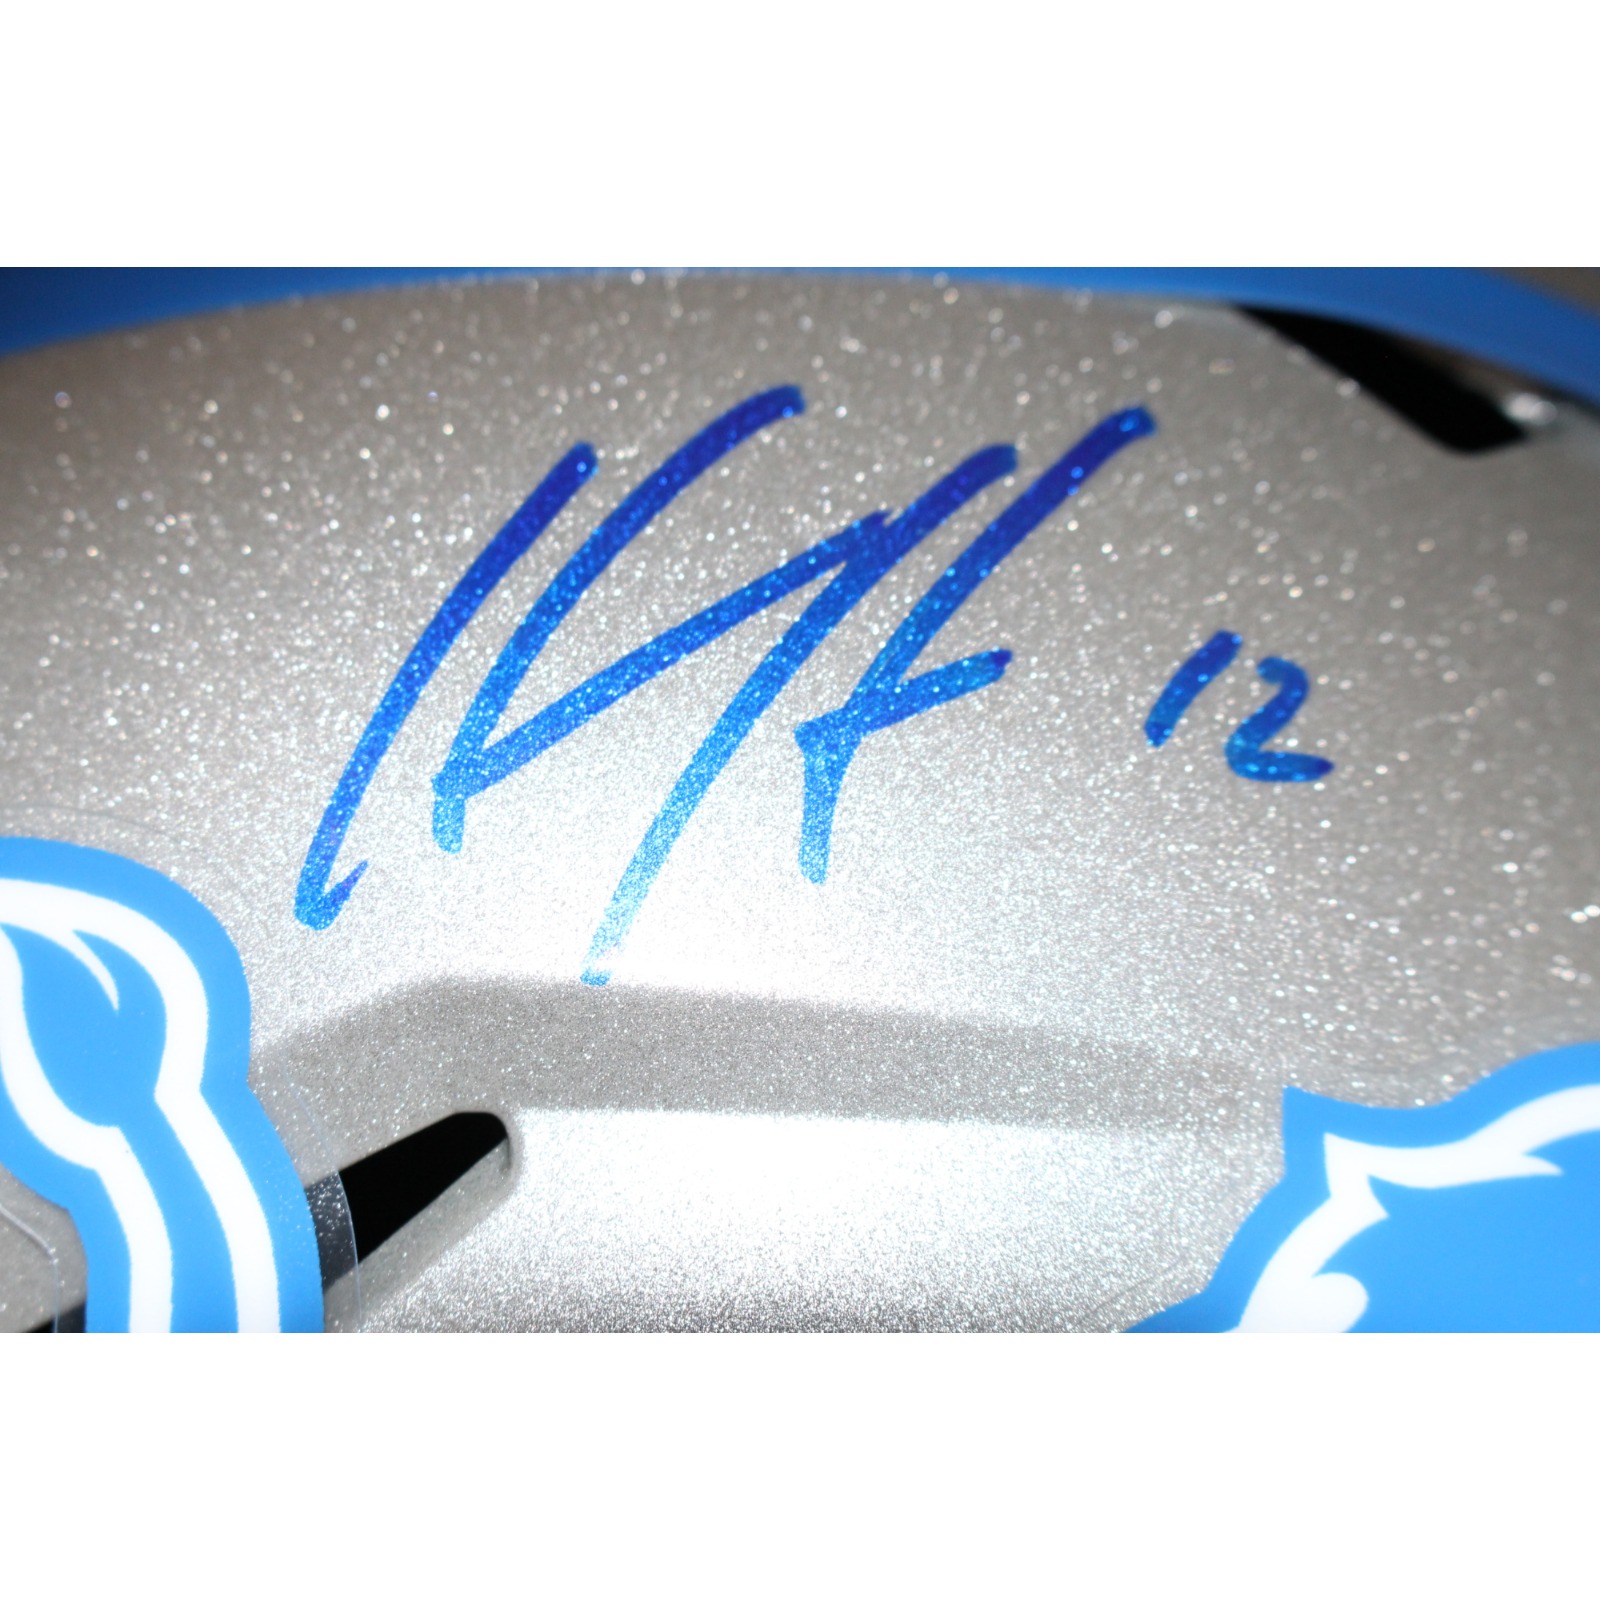 Hendon Hooker Autographed/Signed Detroit Lions F/S Helmet Beckett